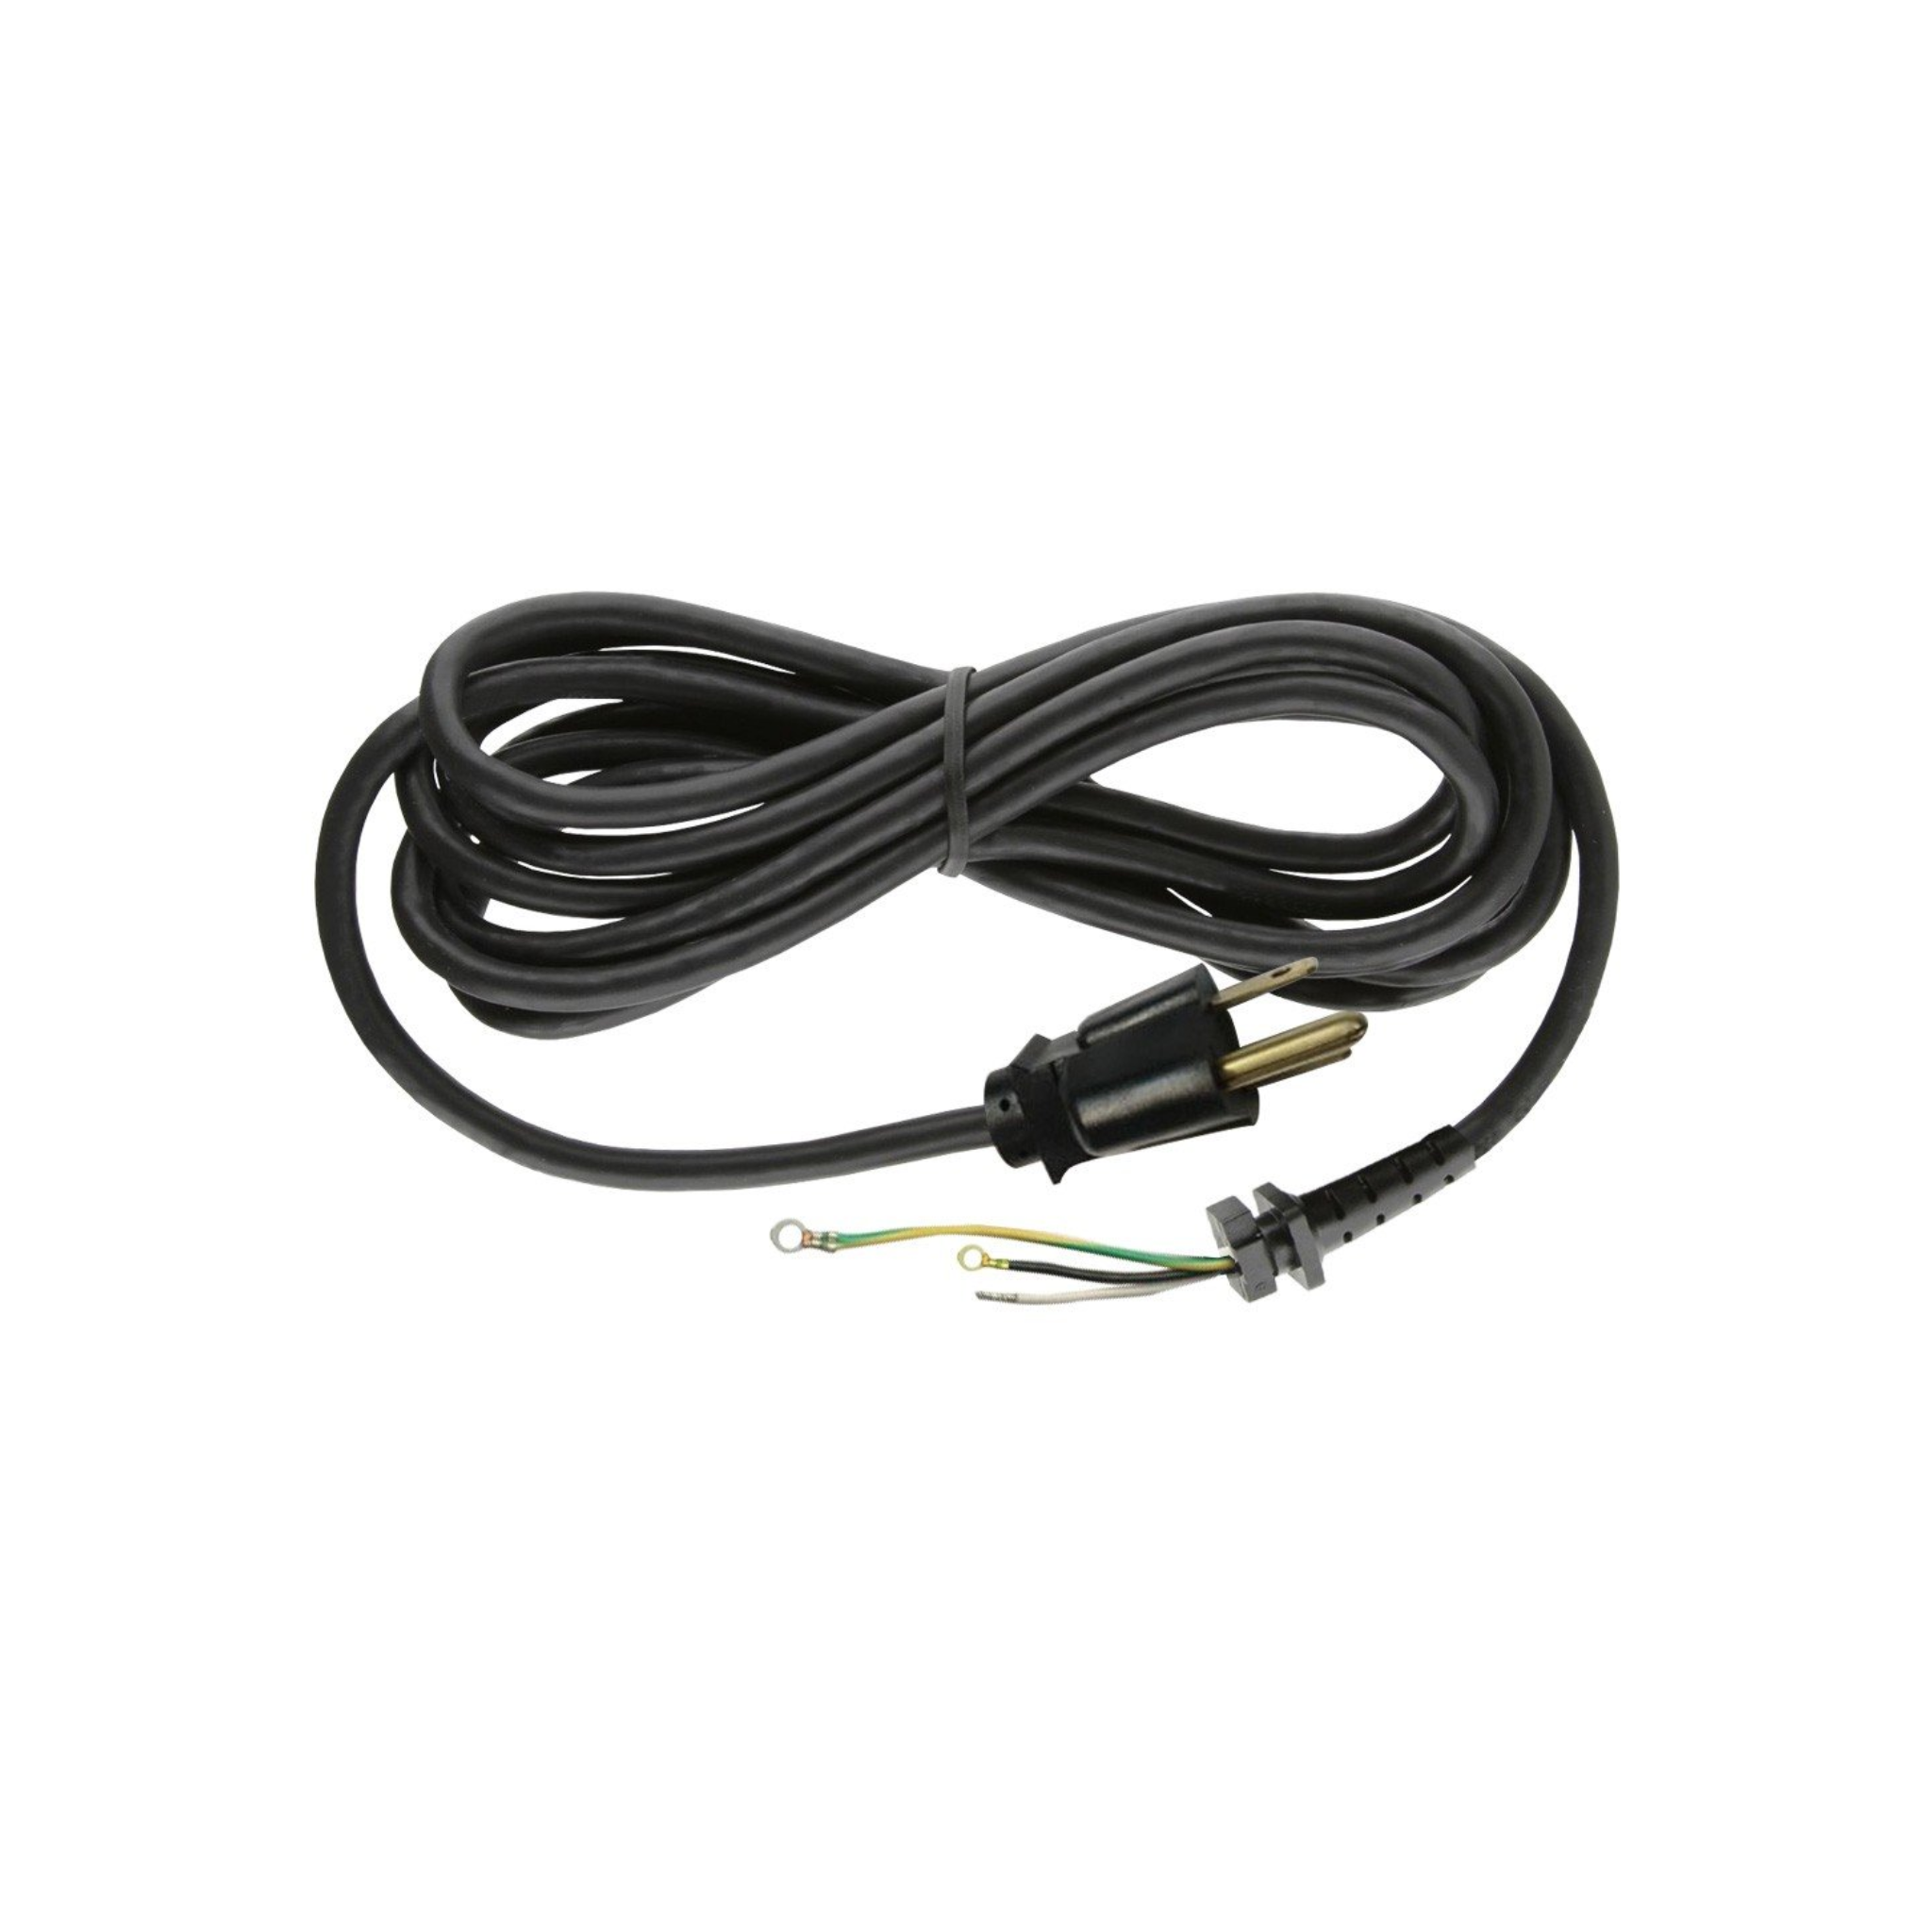 Outliner/T Outliner - Trimmer Cord (3 Wire)